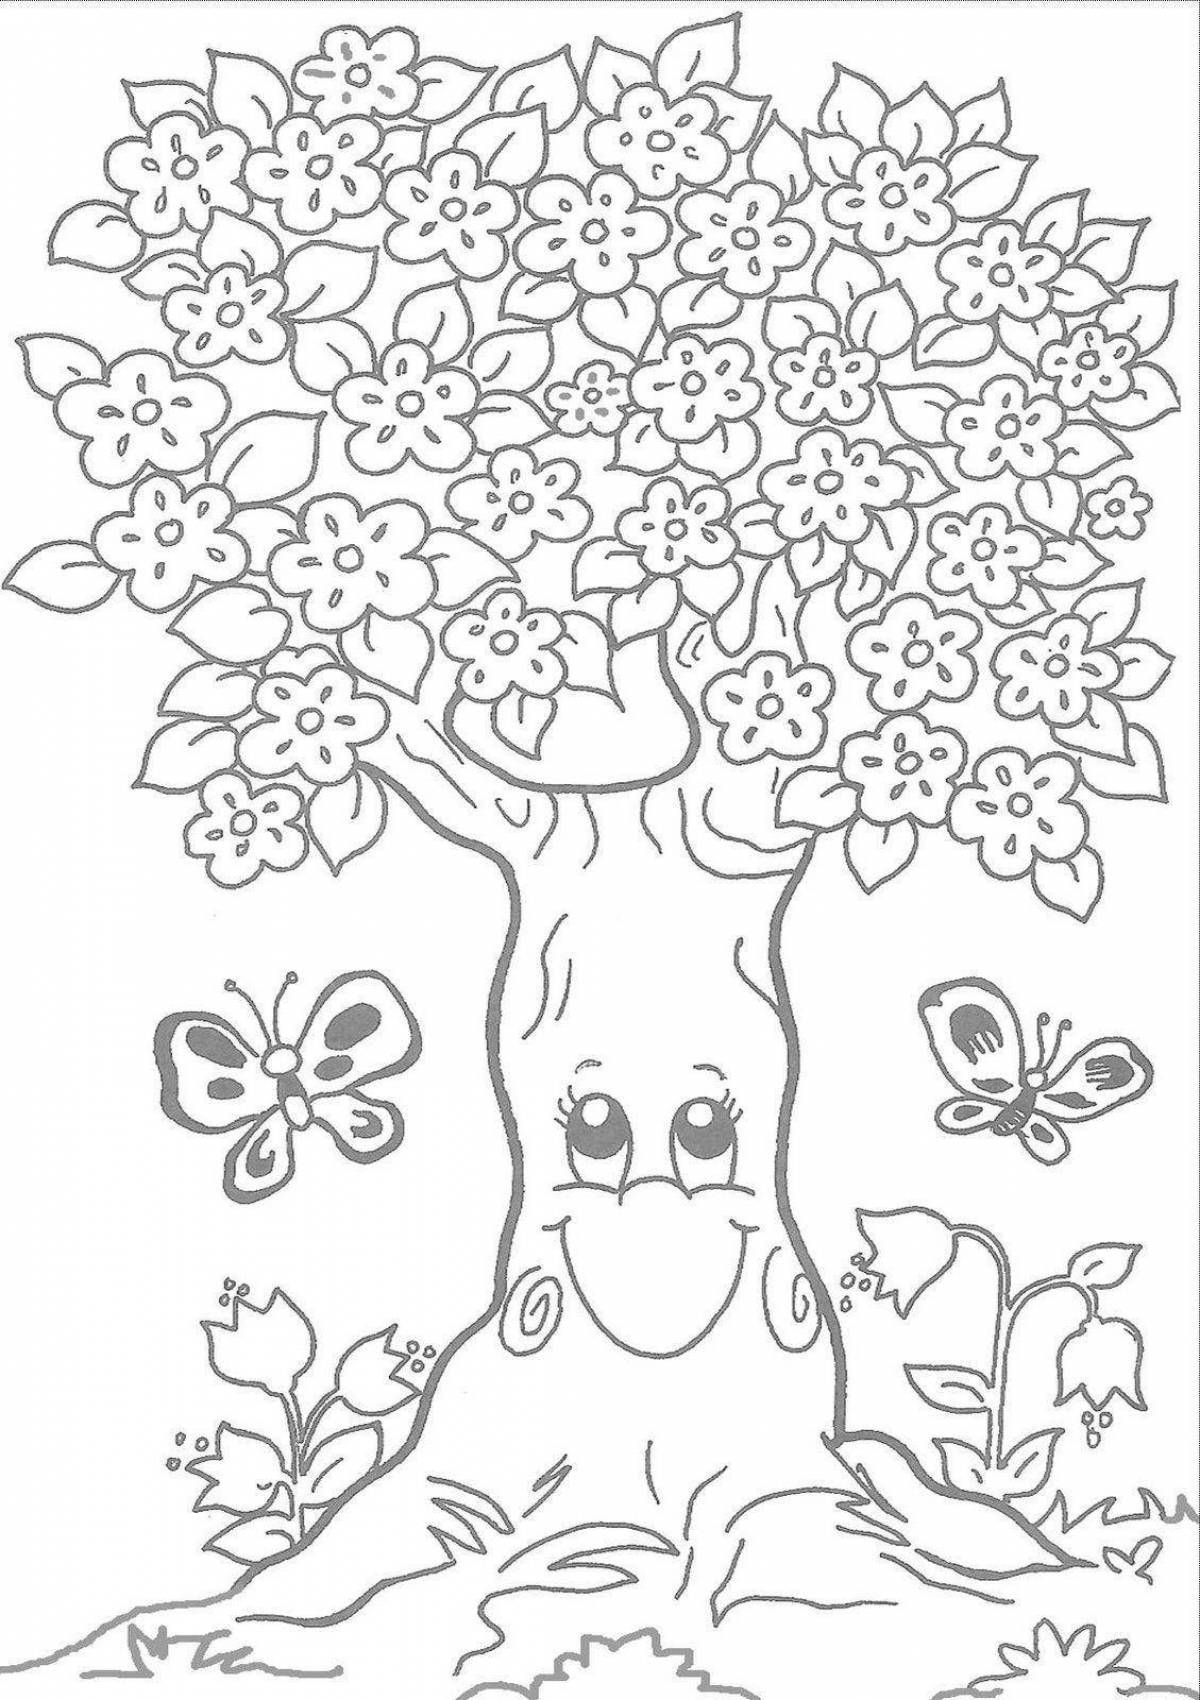 Coloring page charming wonder tree